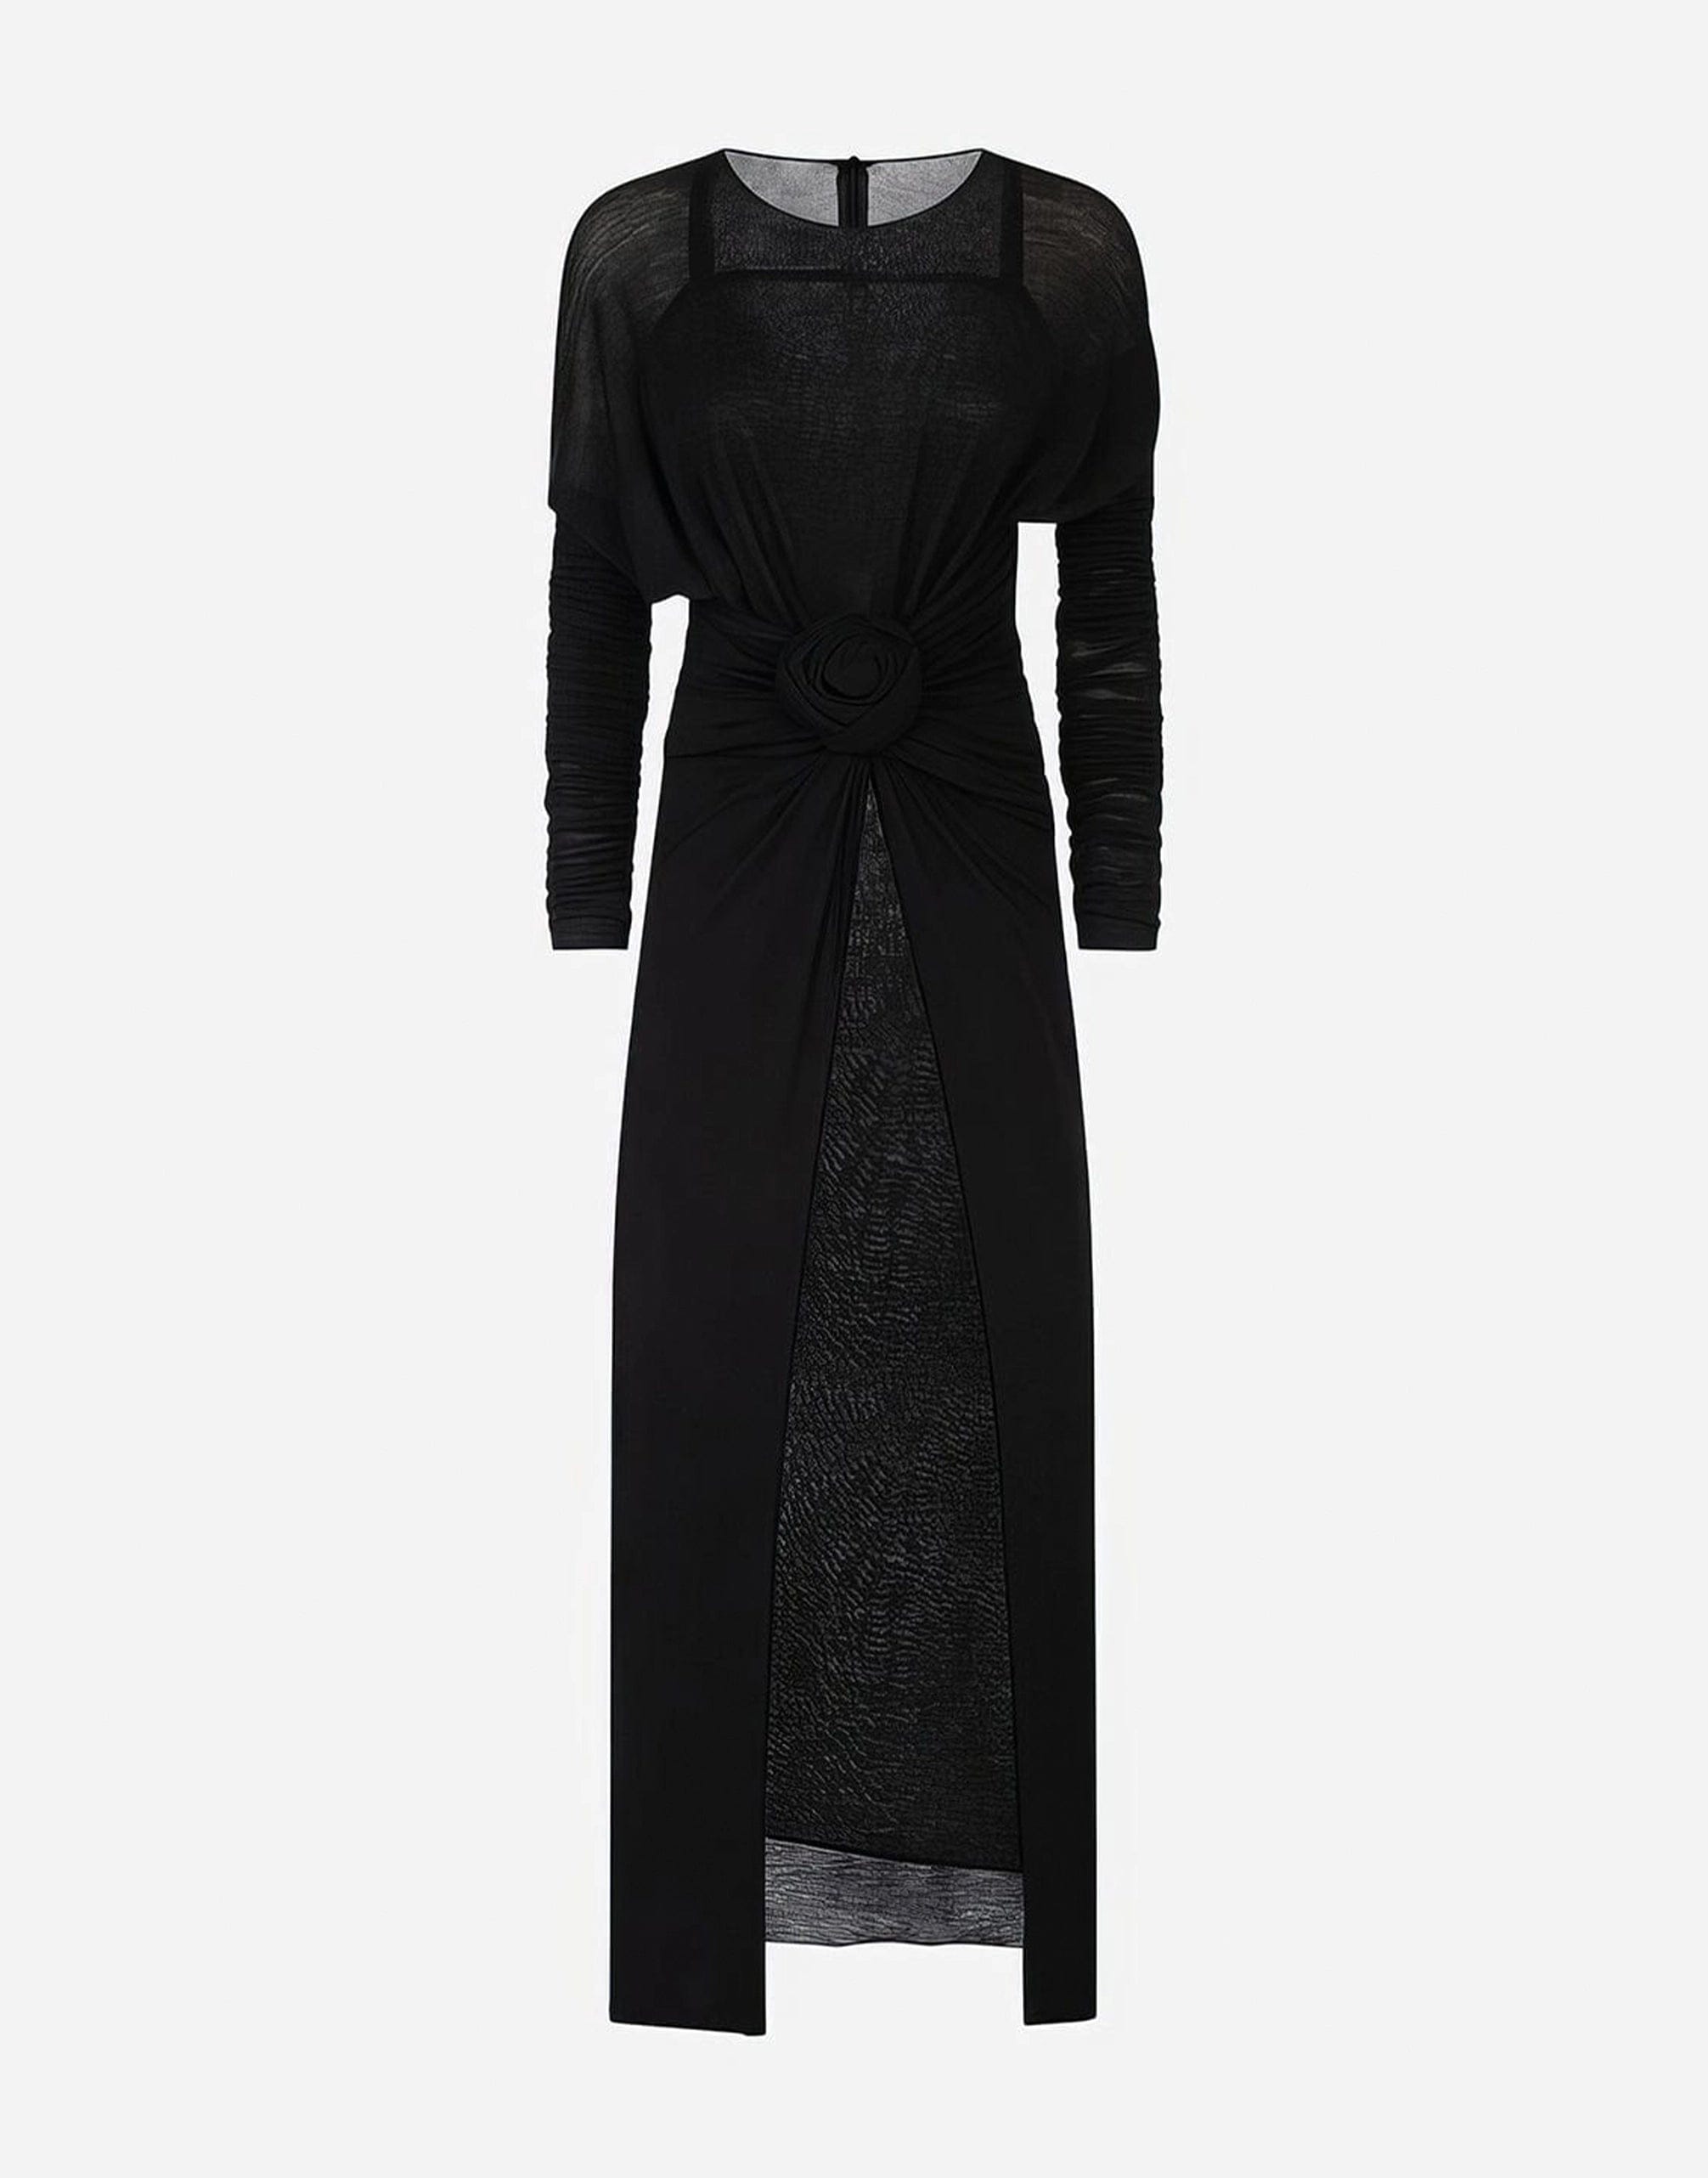 Dolce & Gabbana Front-Tie Midi Dress